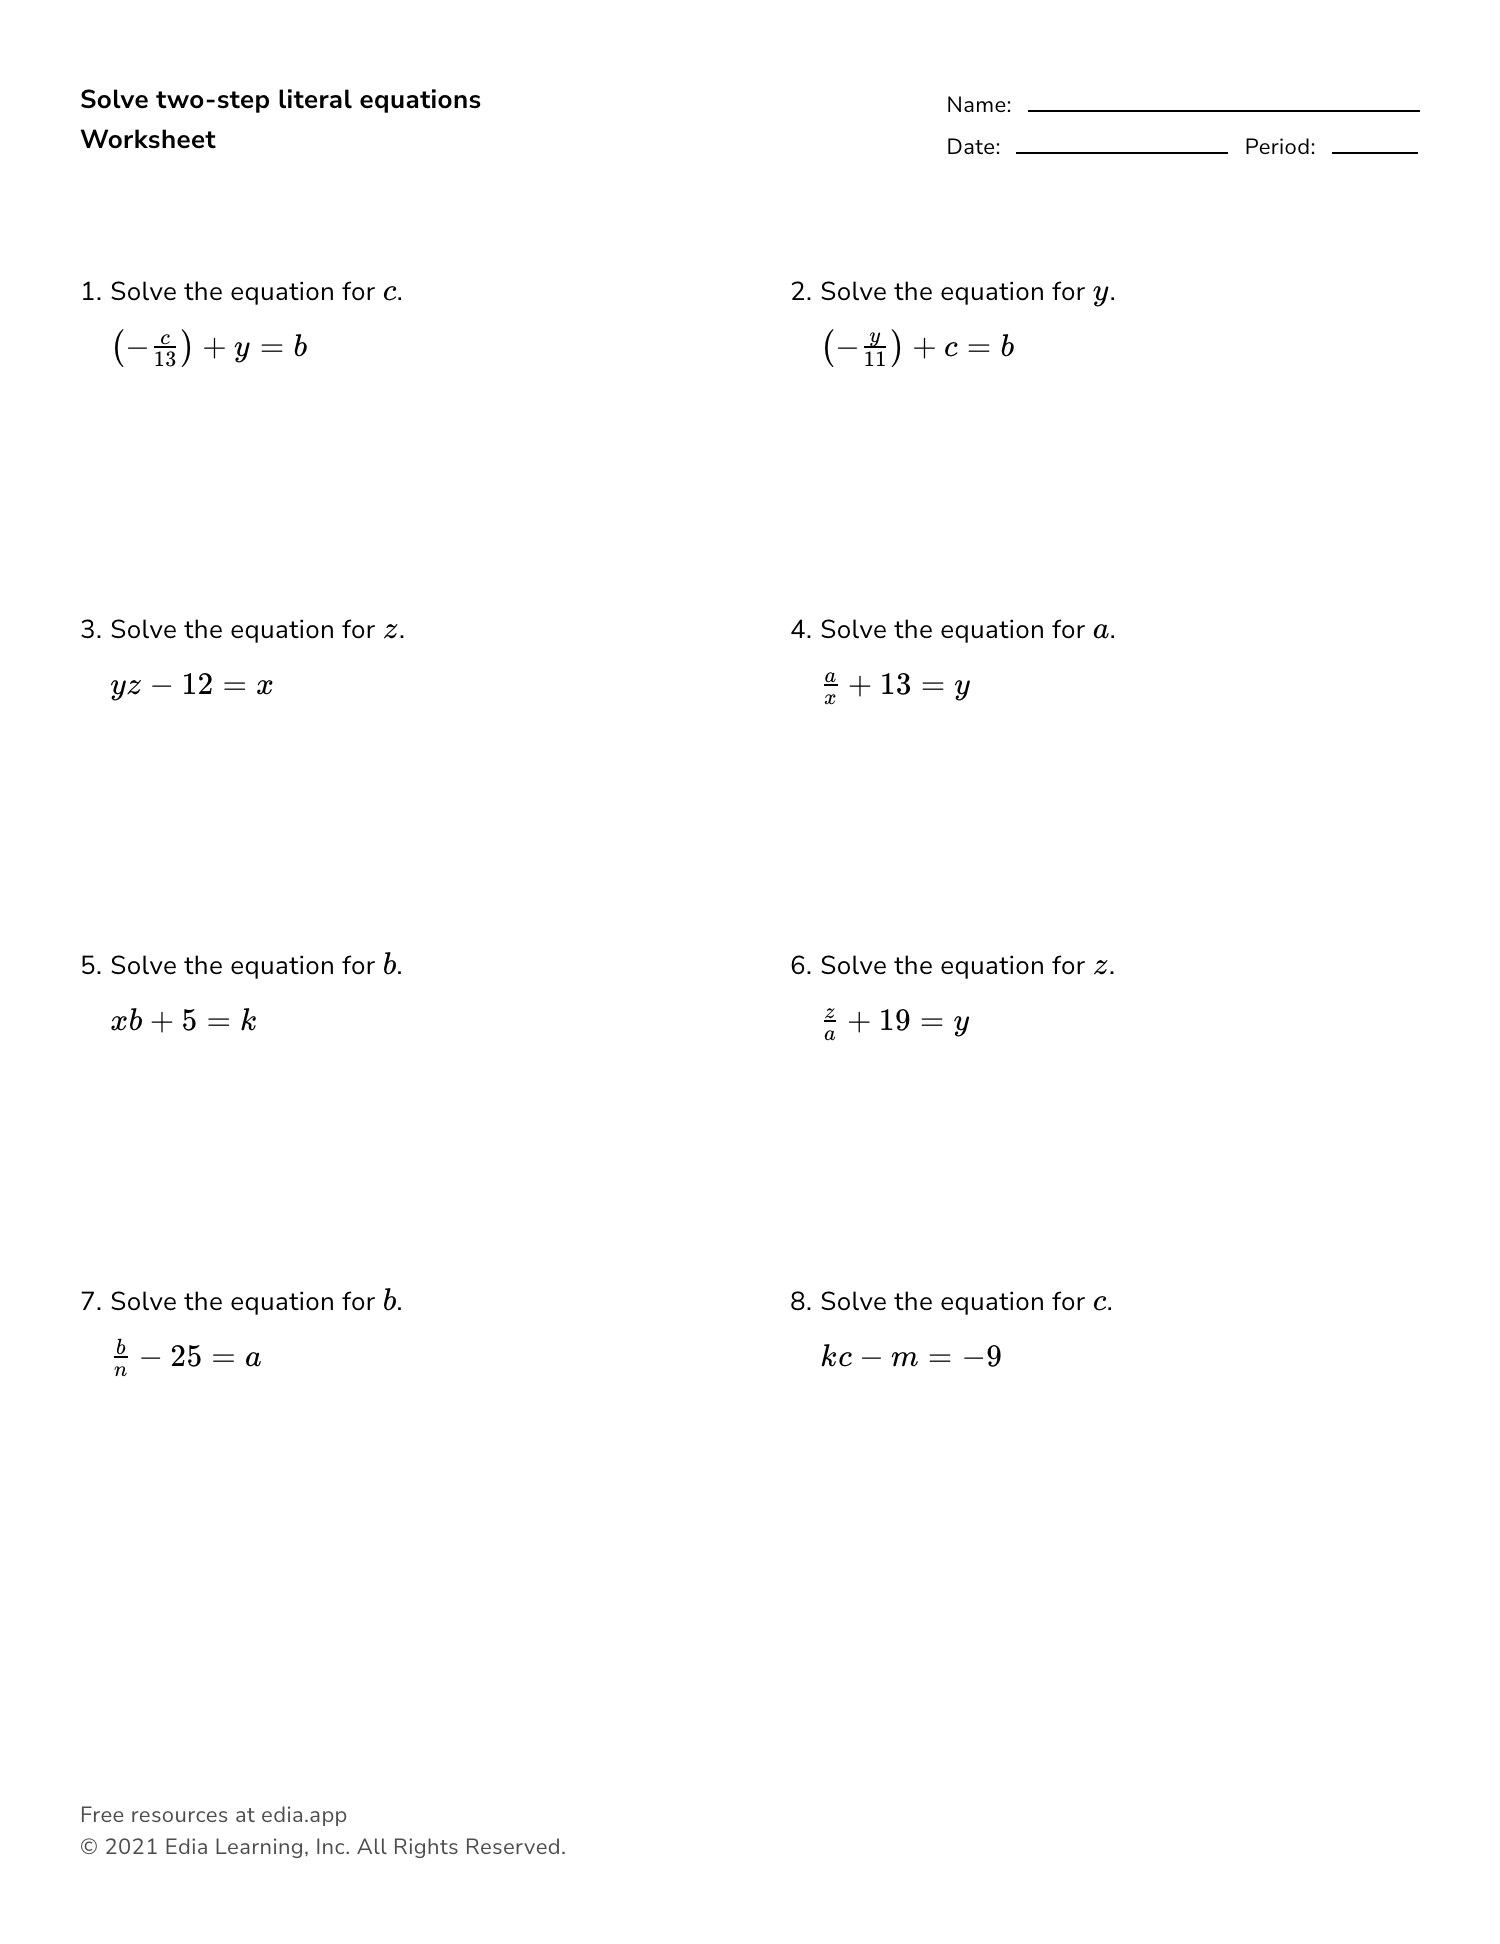 Solve Two-step Literal Equations - Worksheet Within Solve Literal Equations Worksheet